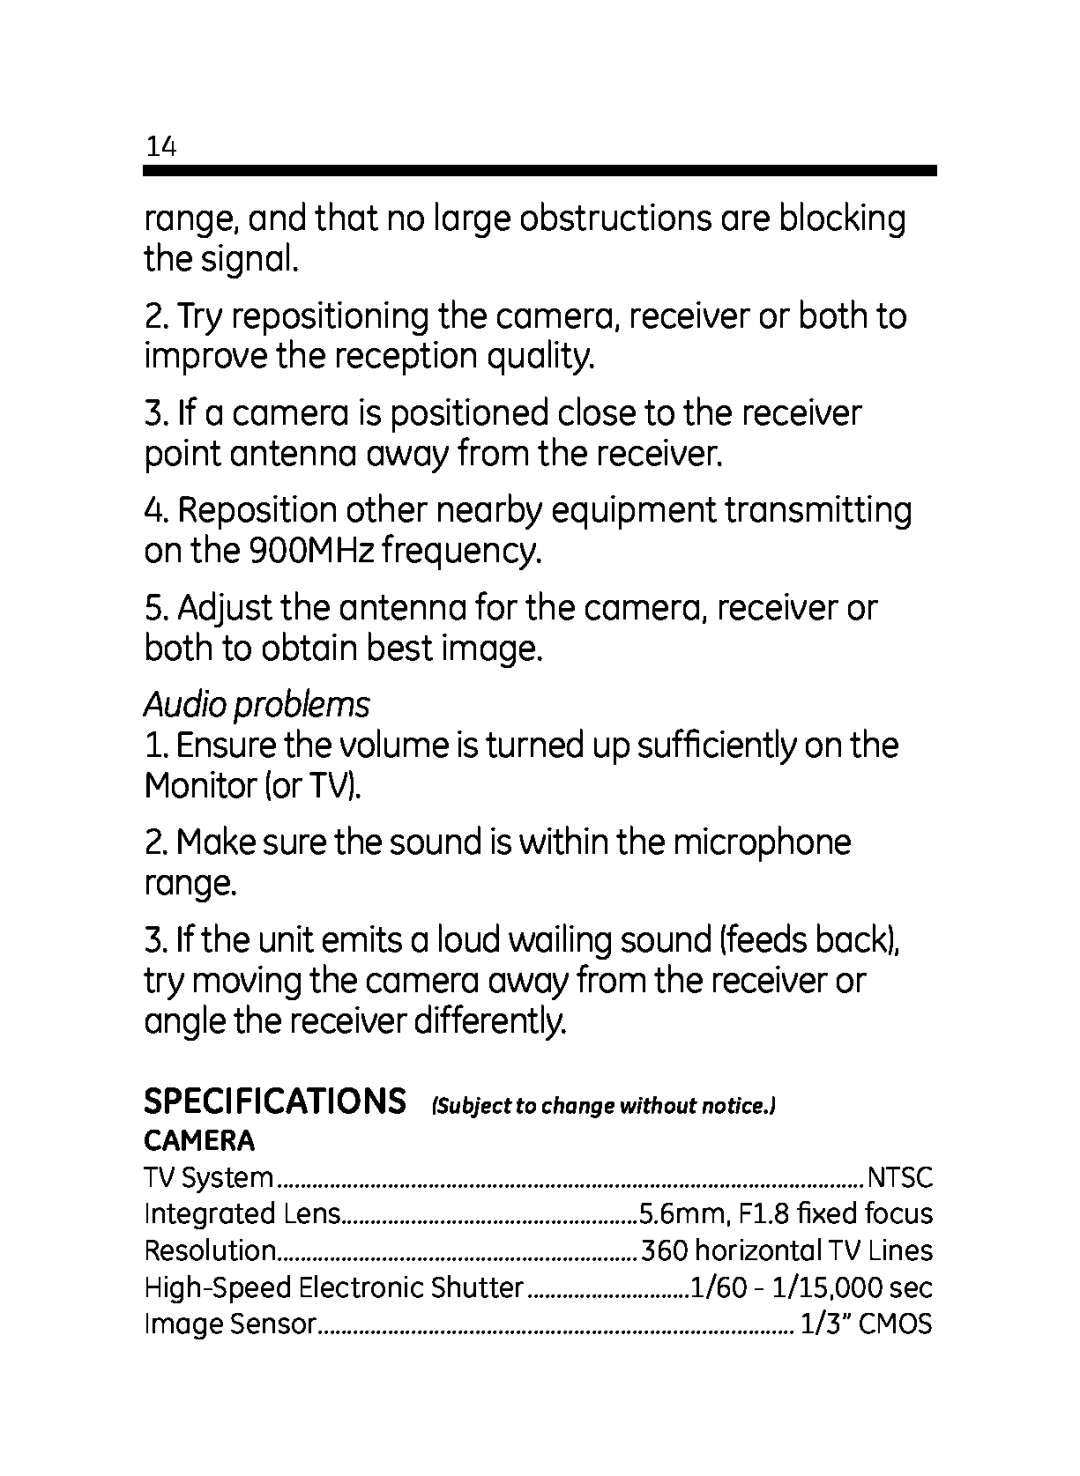 Jasco 45234 user manual Audio problems, Camera 